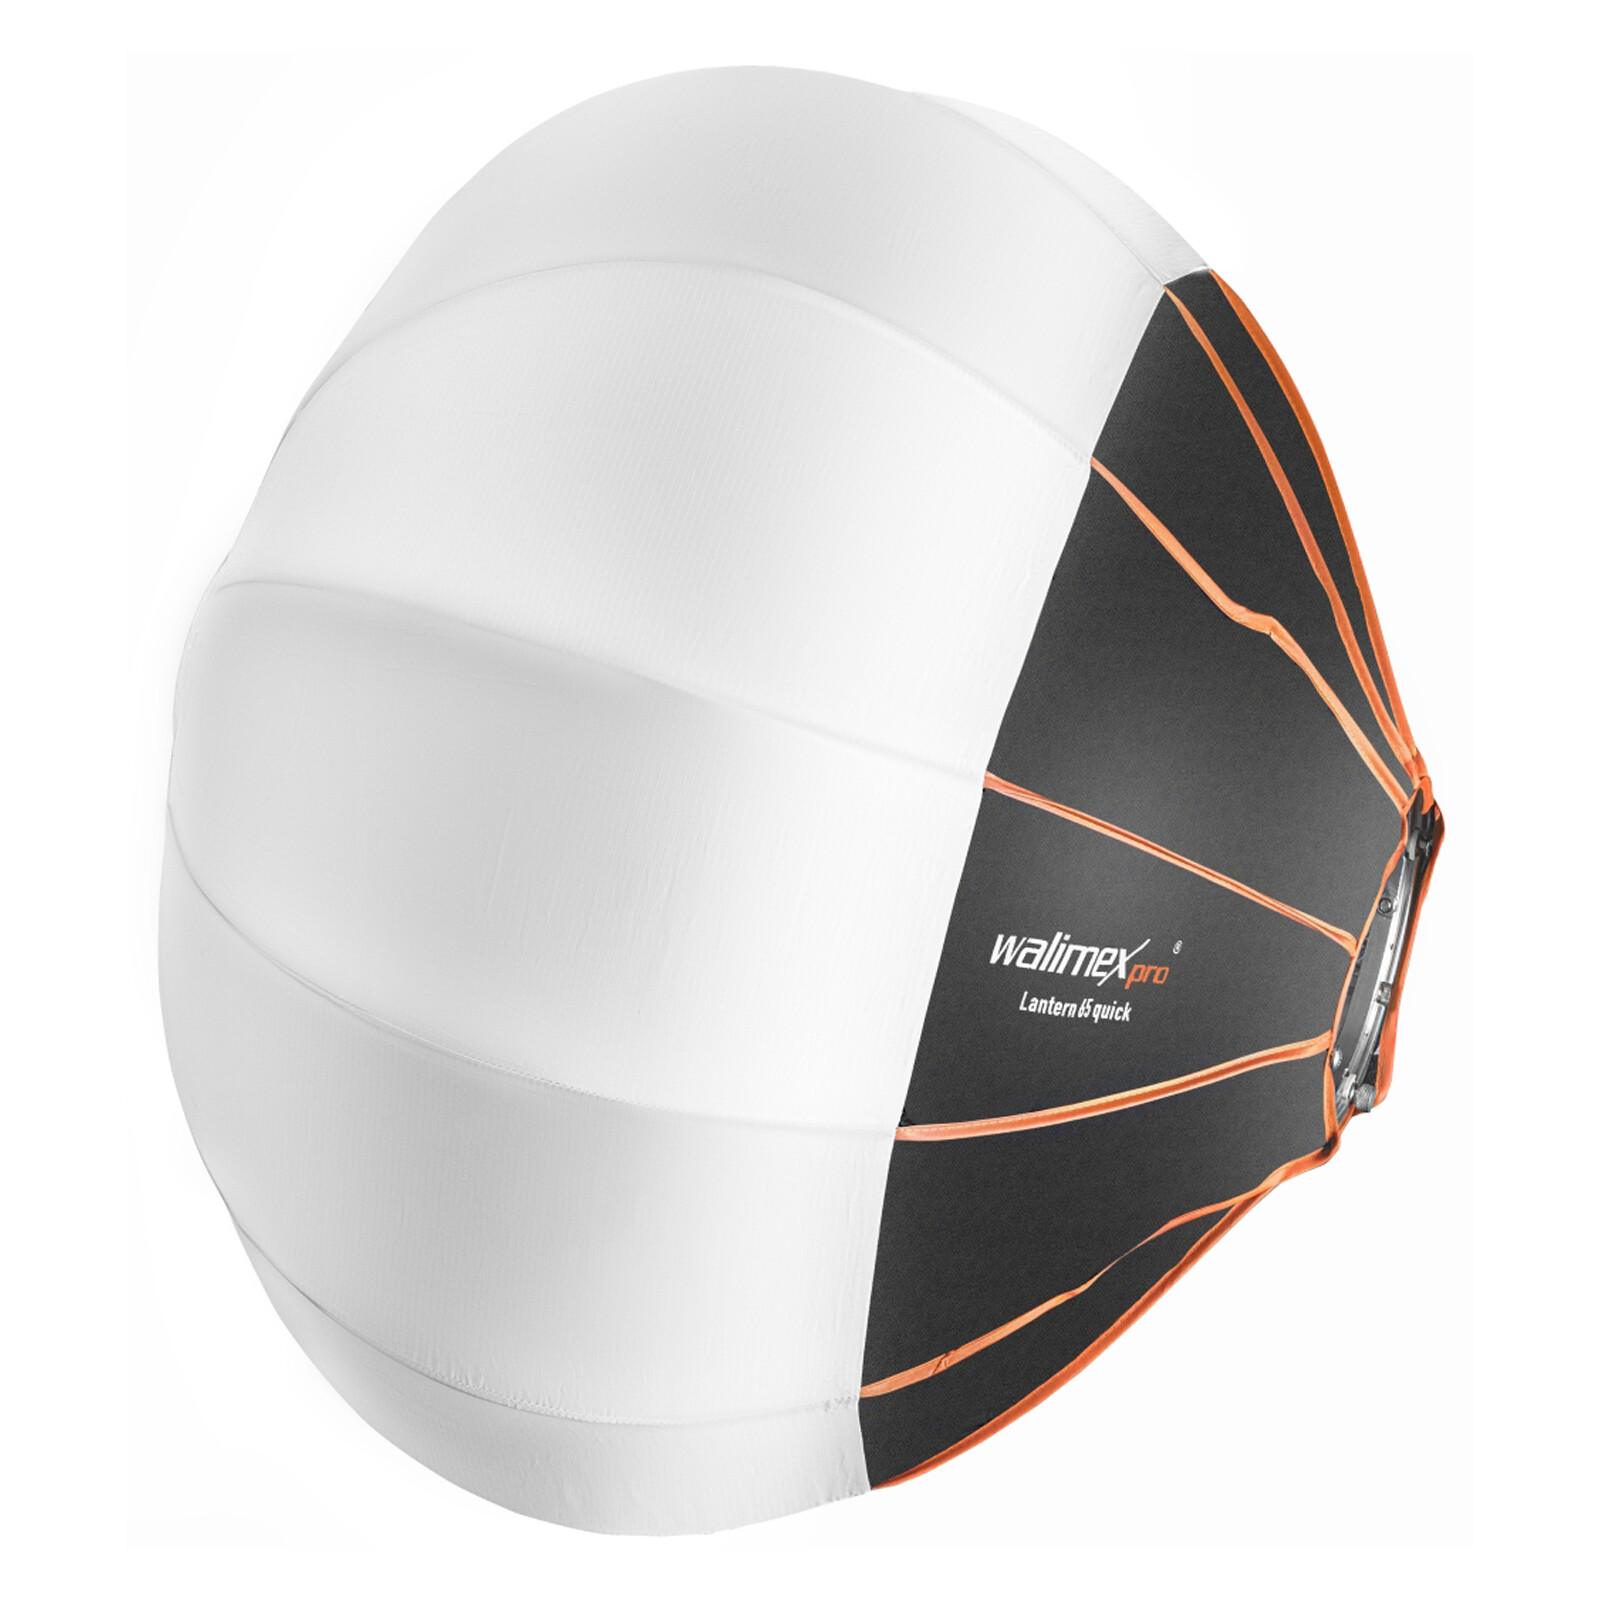 Walimex pro 360° Ambient Light Softbox 65cm Walimex pro & K